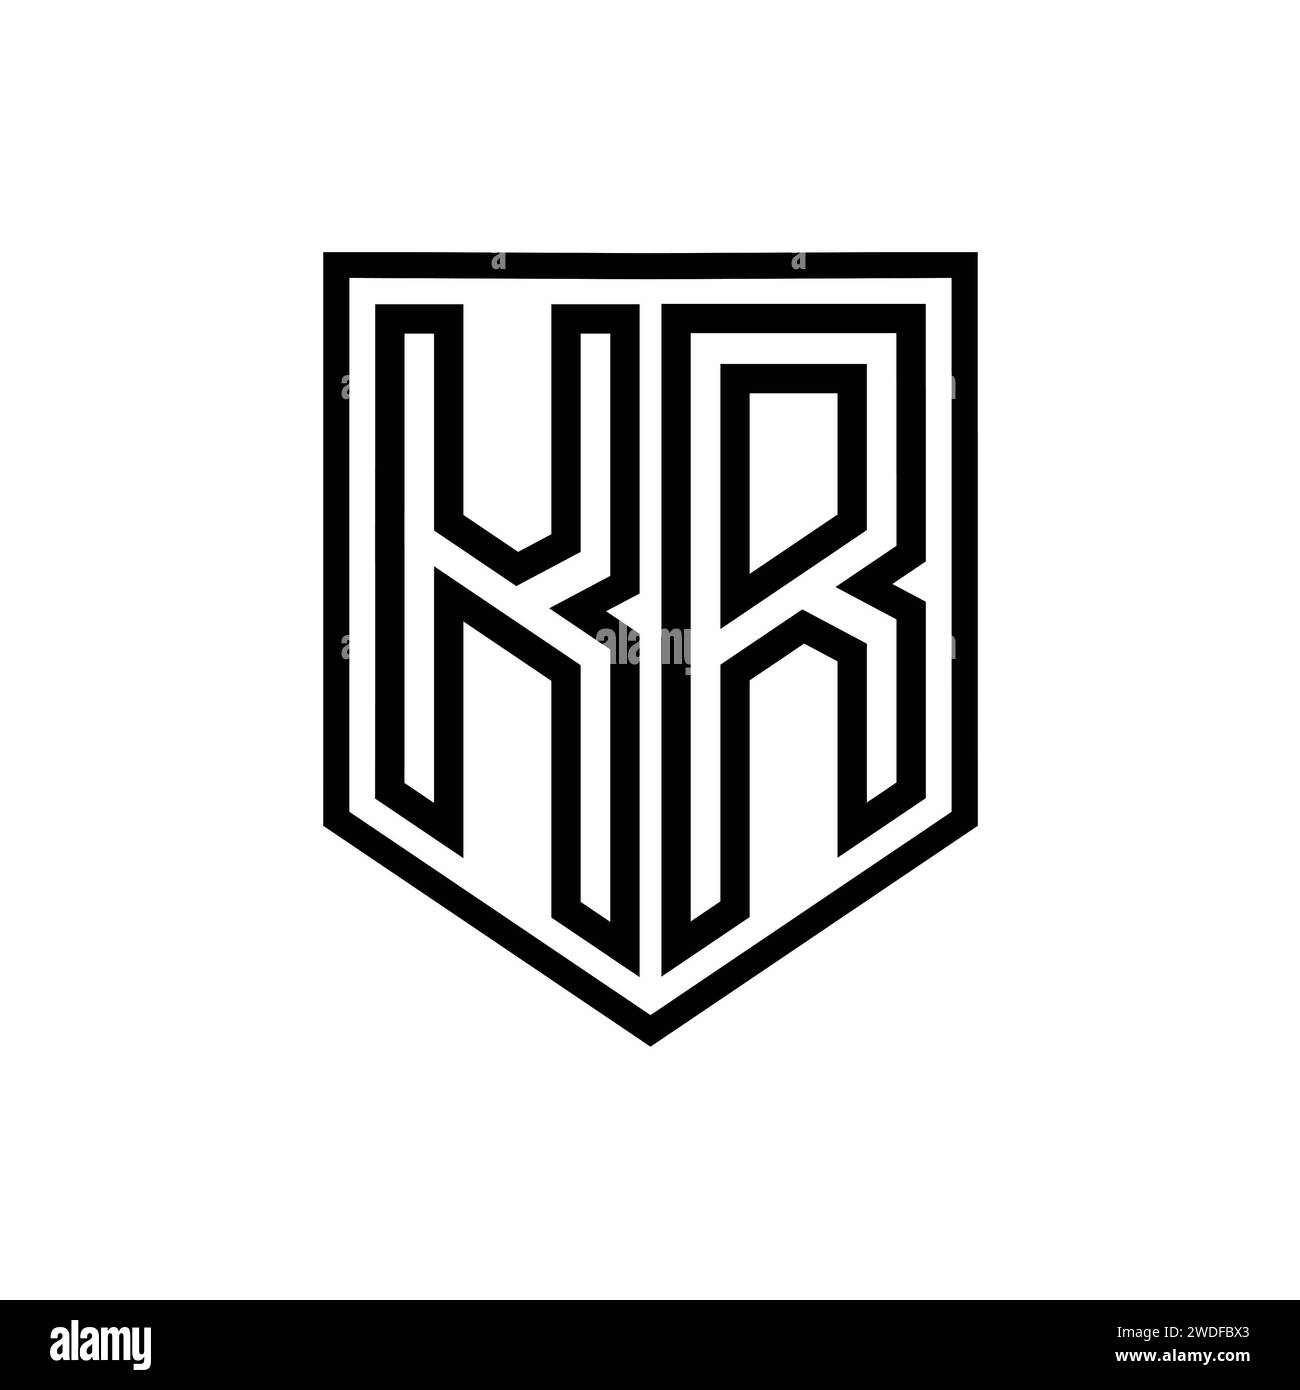 KR Letter Logo monogram shield geometric line inside shield isolated style design template Stock Photo